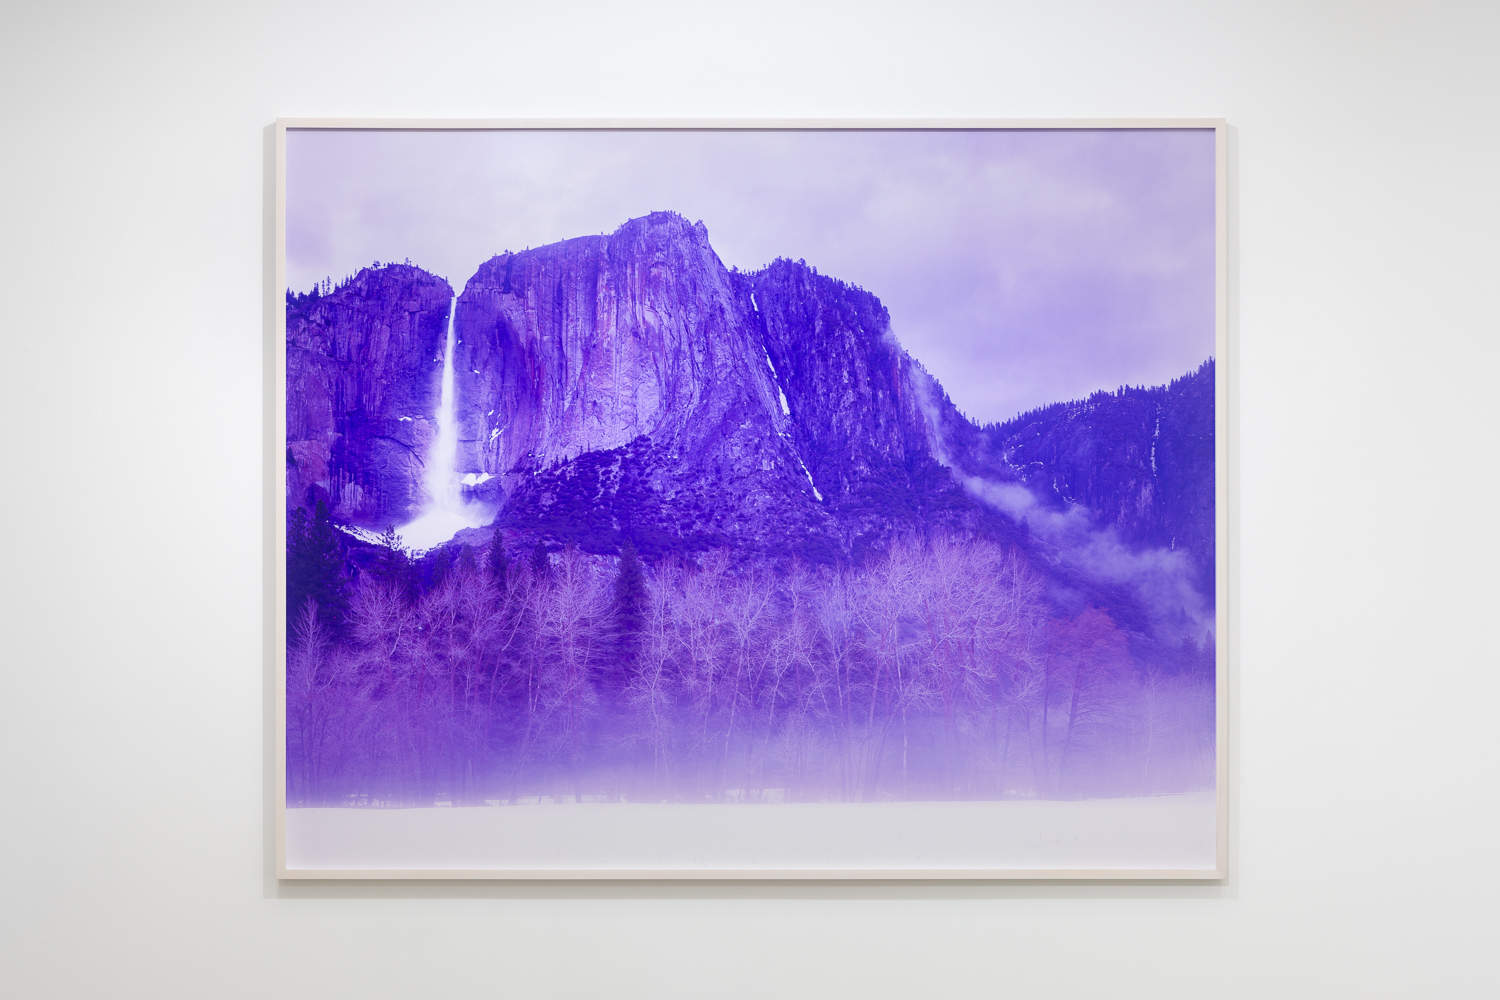 David Benjamin Sherry, Winter Morning Fog, Bridalveil Falls, Yosemite, California, 2013, c-type print, framed